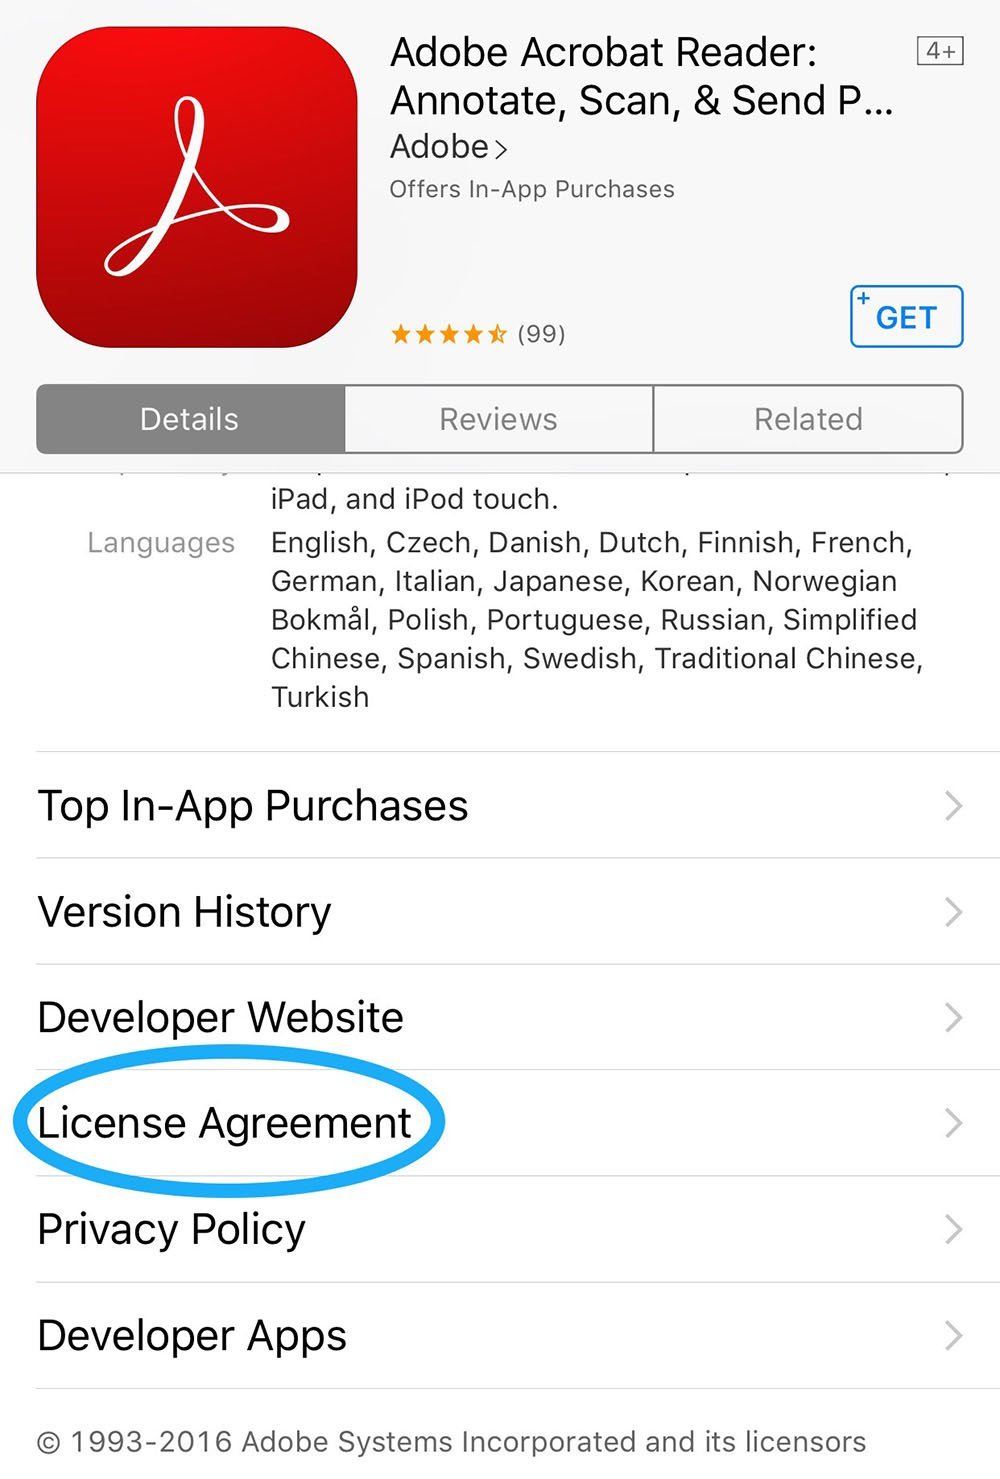 Adobe Acrobat Reader: App Store profile page: License Agreement